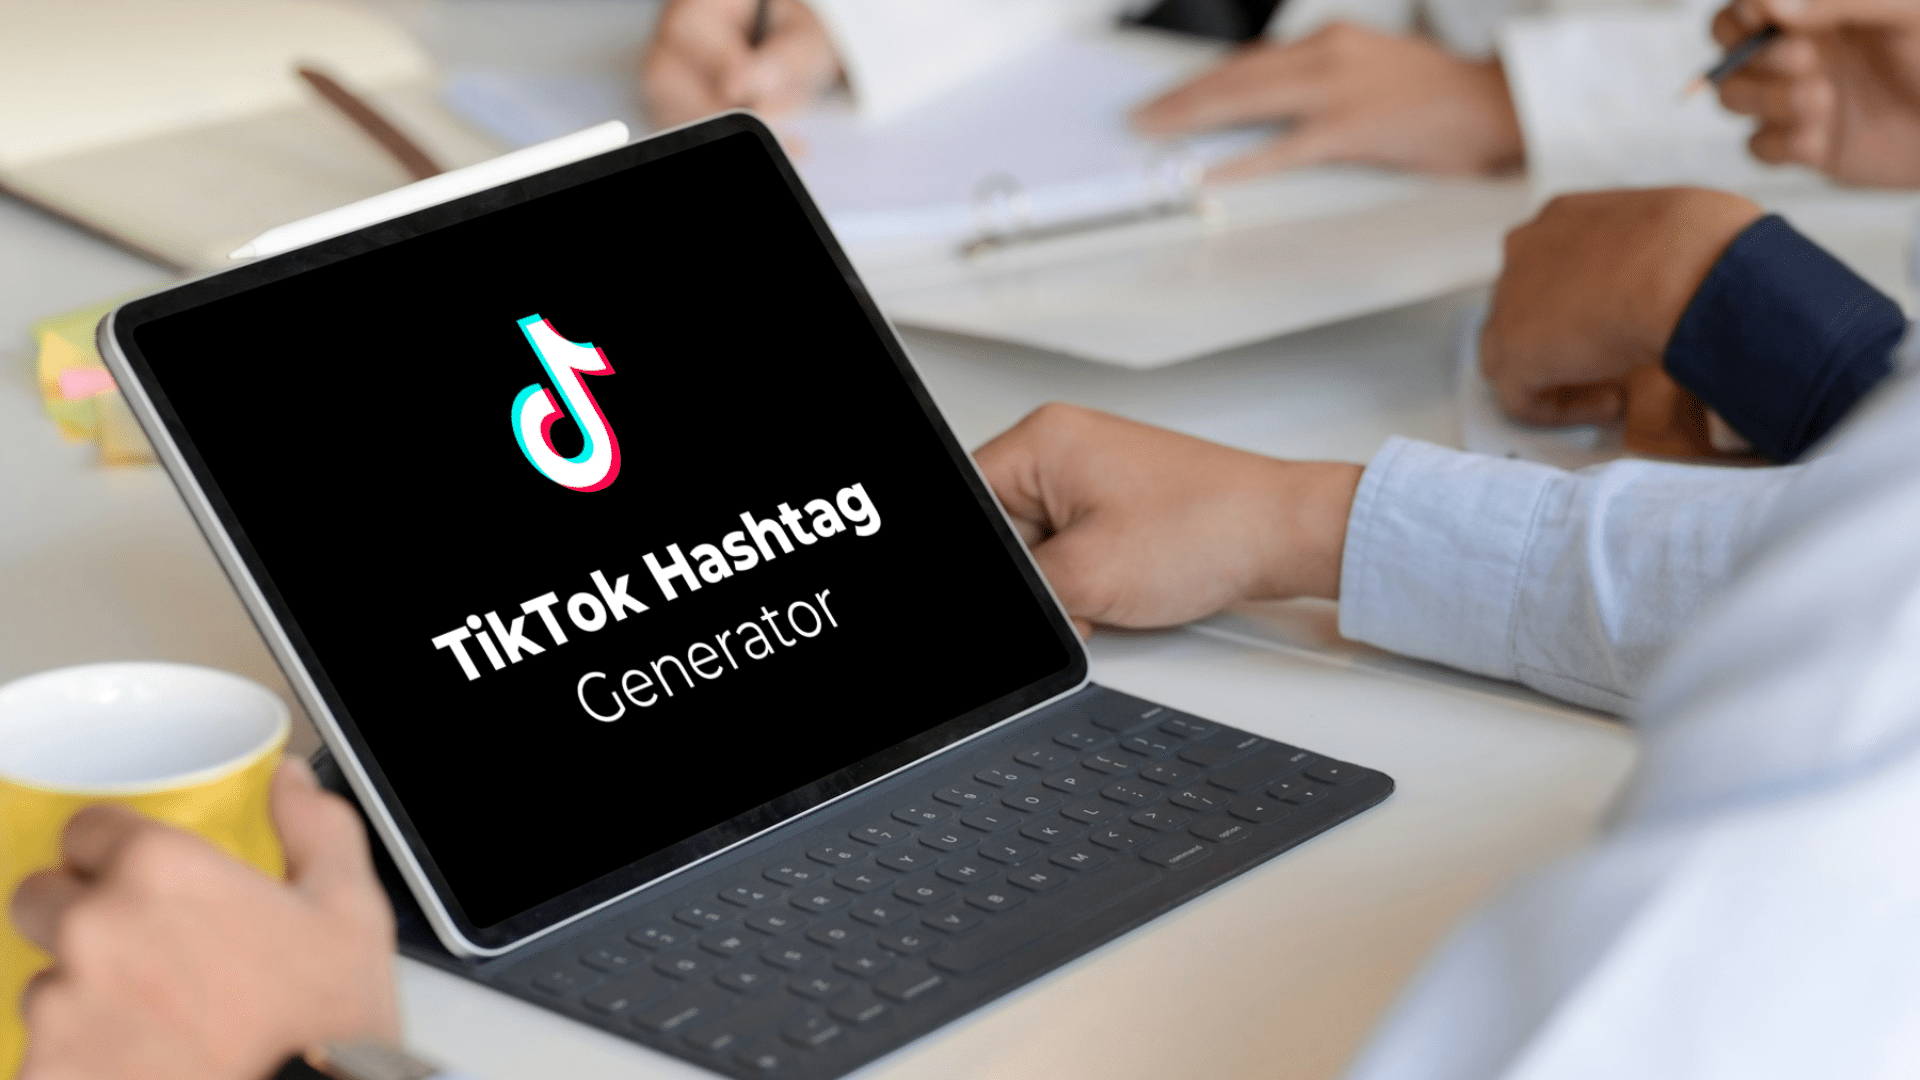 TikTok Hashtag Generator Free Tools